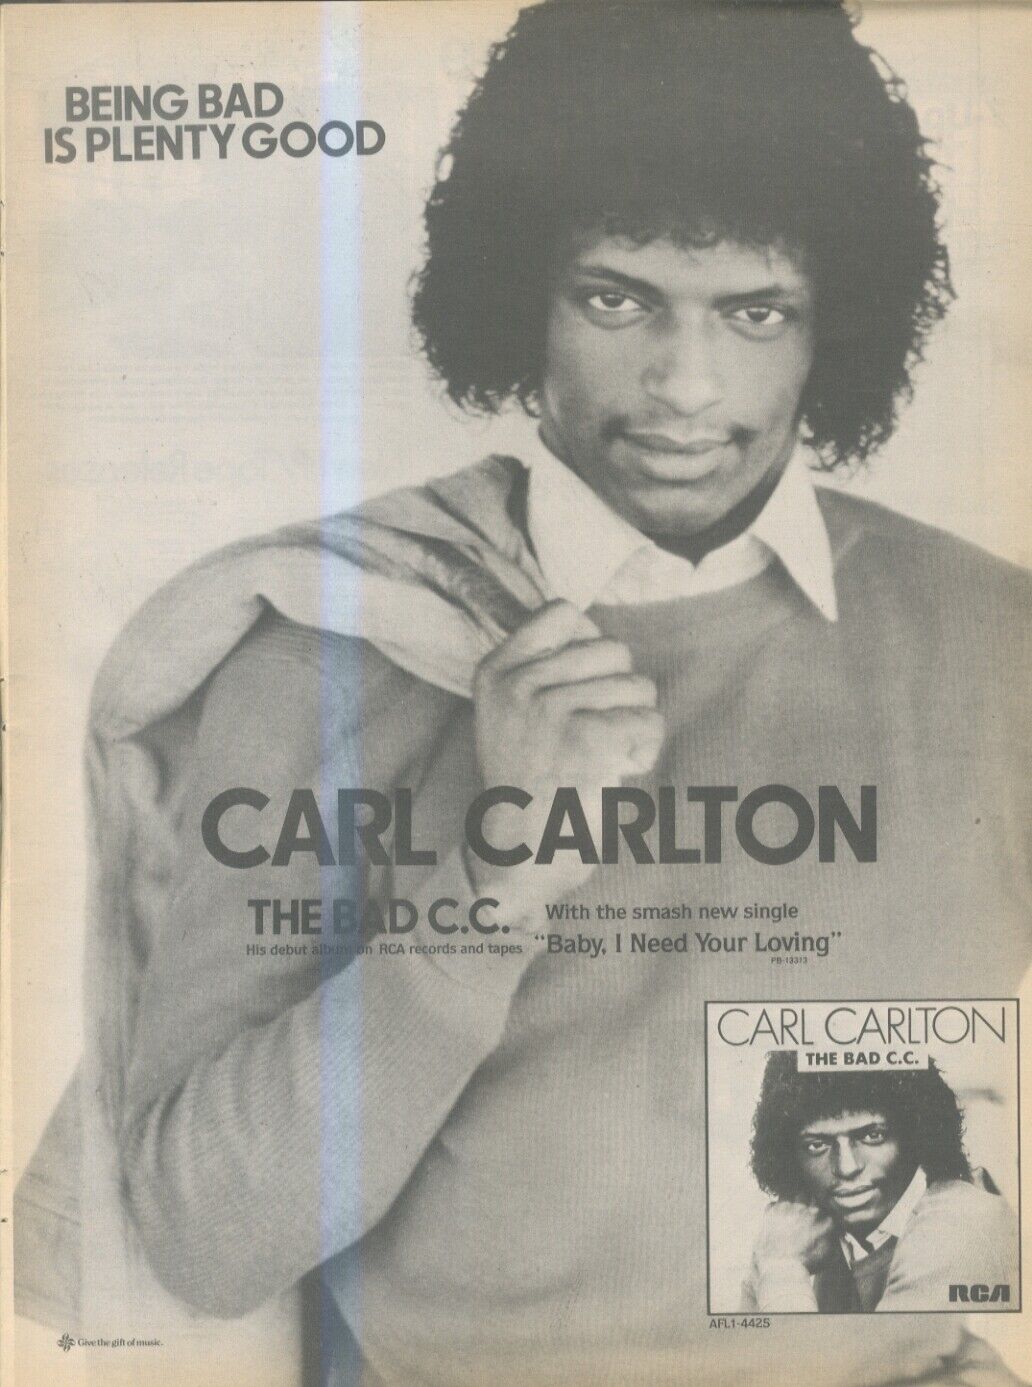 SFBK23 PICTURE/ADVERT 14X11 CARL CARLTON : THE BAD C.C.